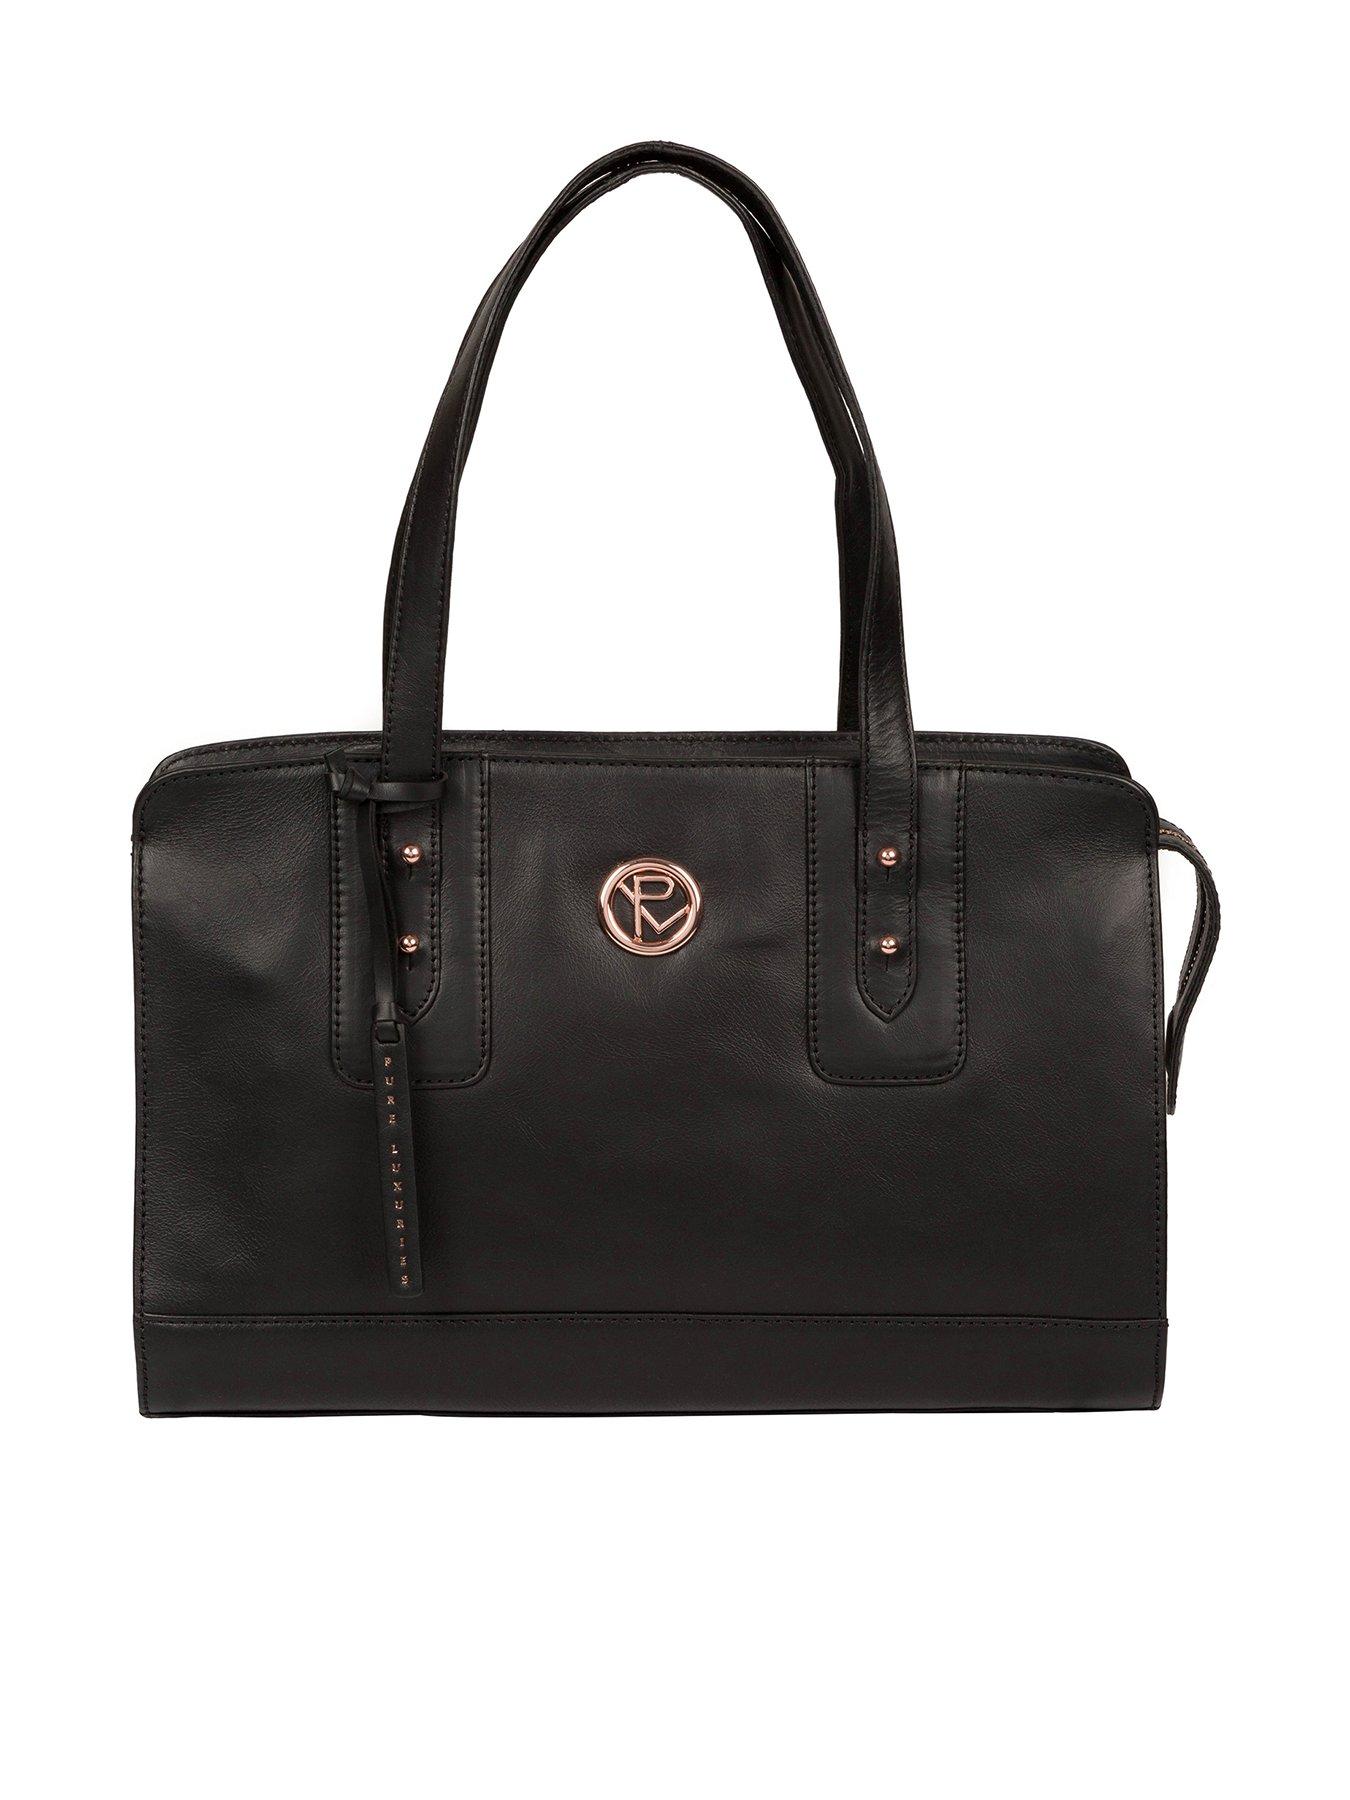  Klee Leather Zip Top Handbag - Black